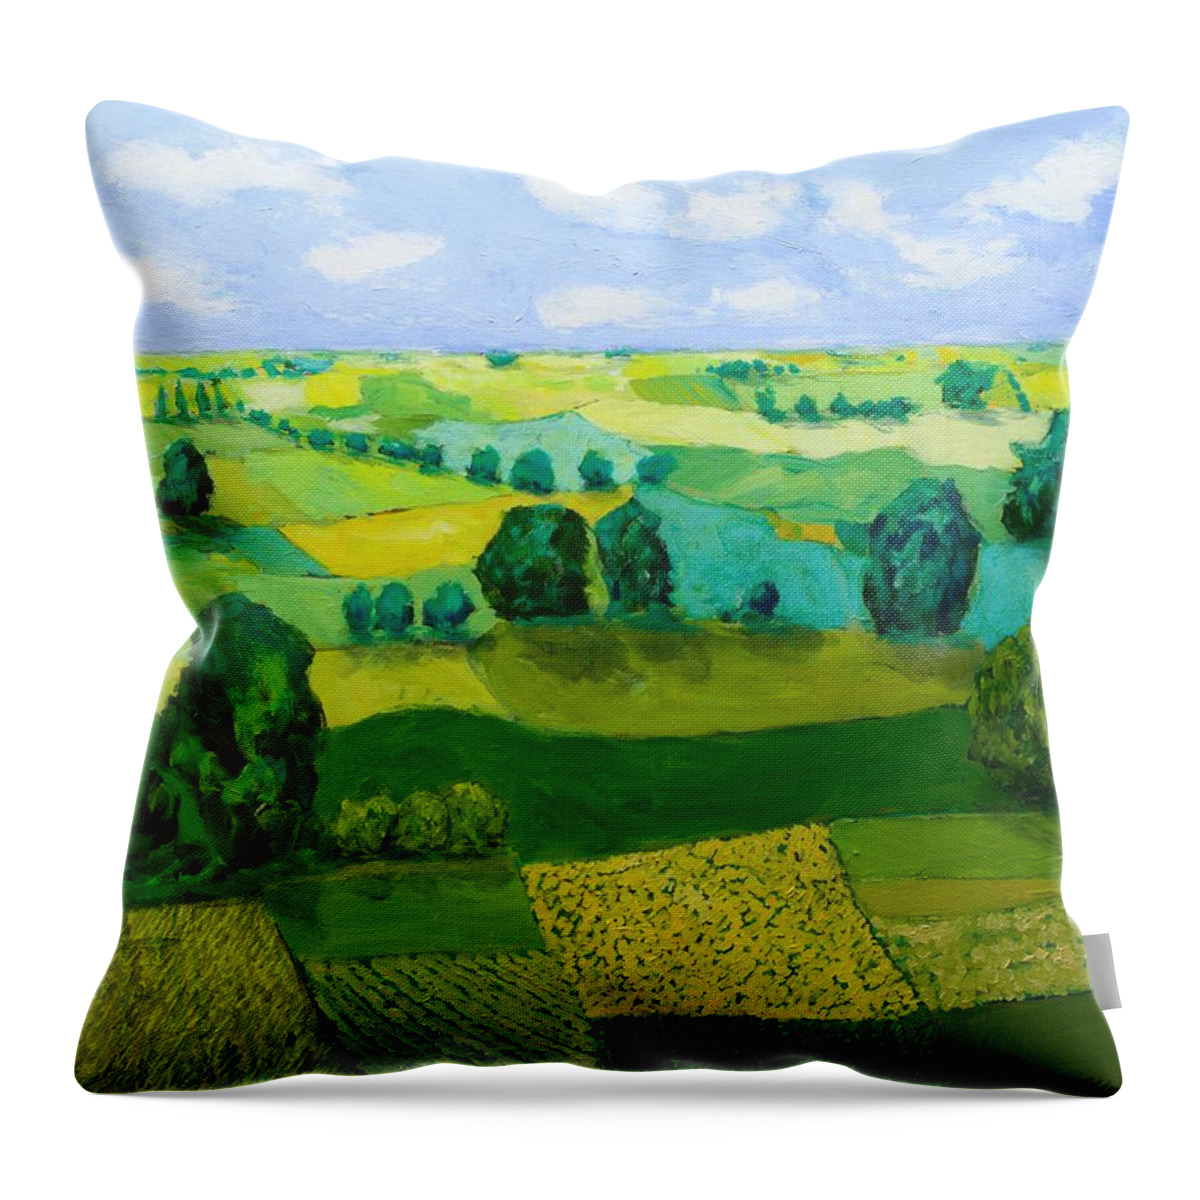 Landscape Throw Pillow featuring the painting Minnesota Fields by Allan P Friedlander